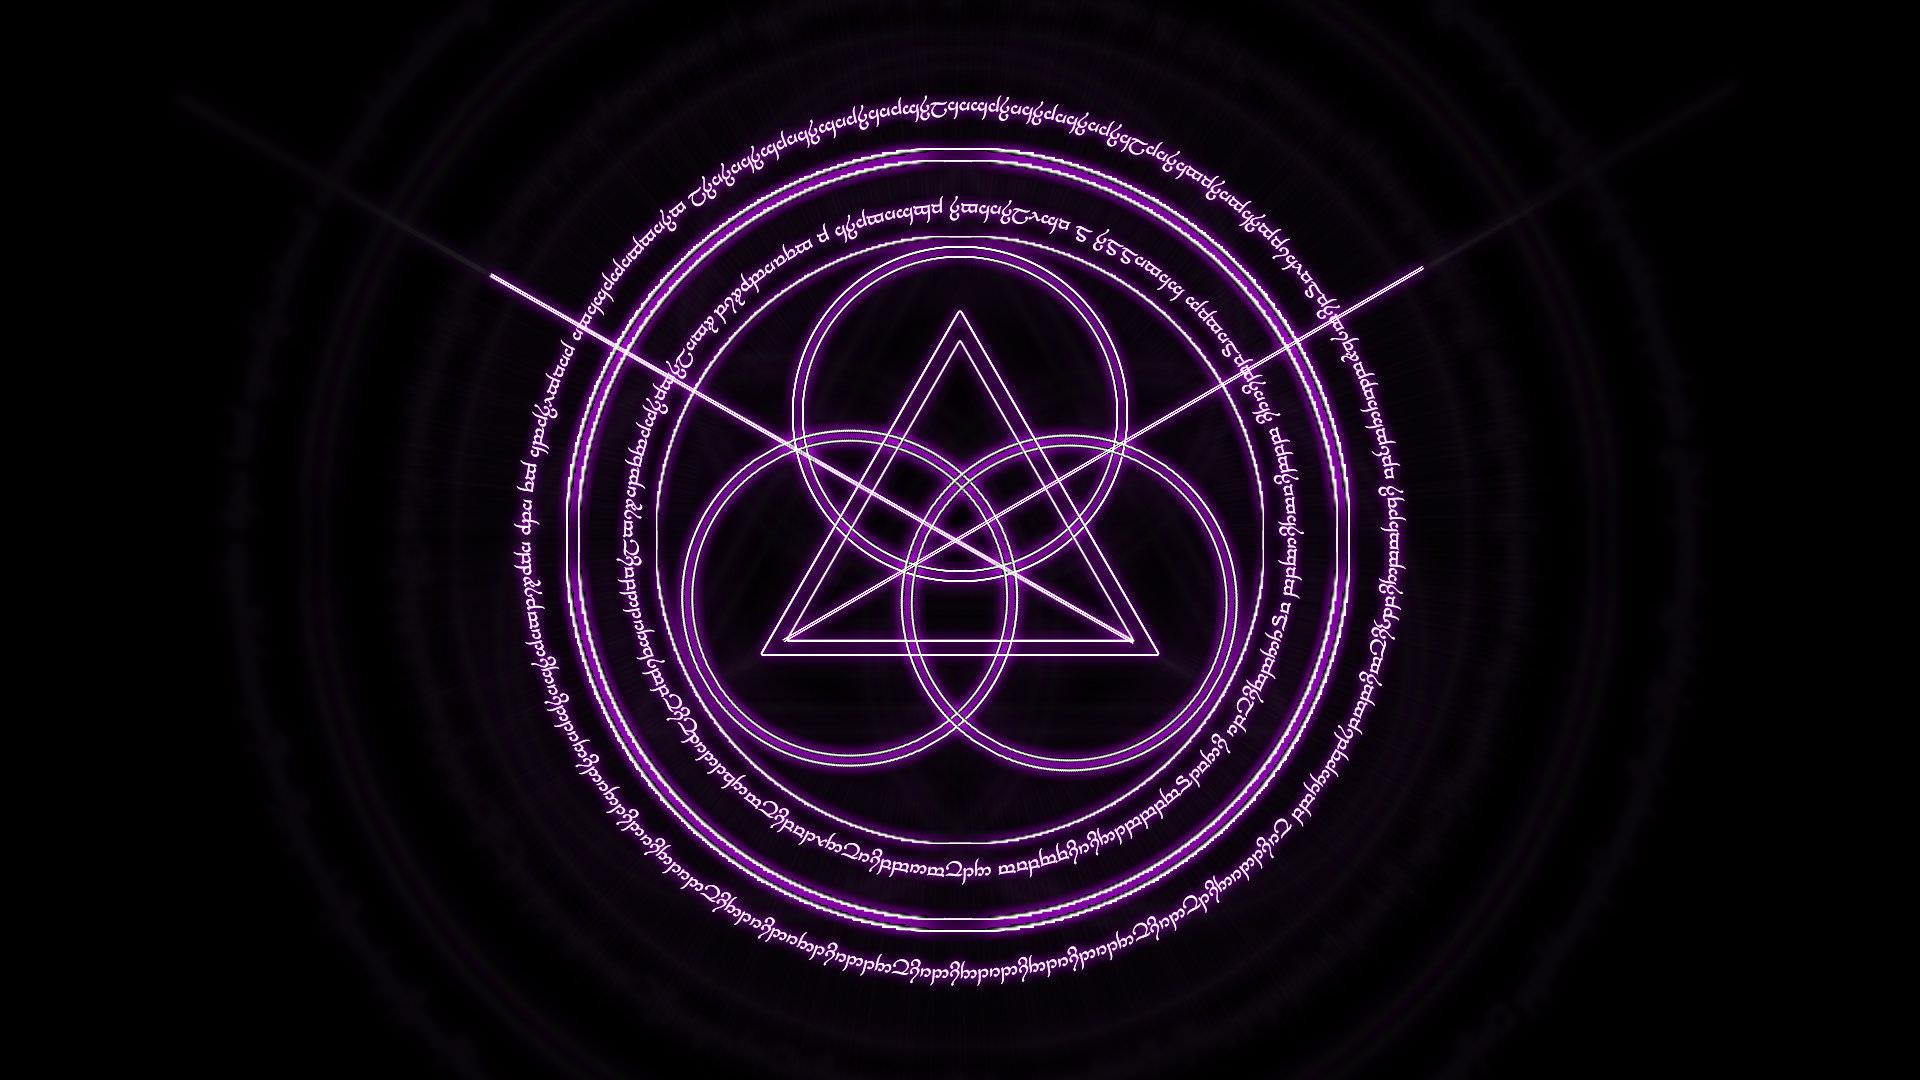 Satanic & Occult wallpaper 1920x1080 Full HD (1080p) desktop